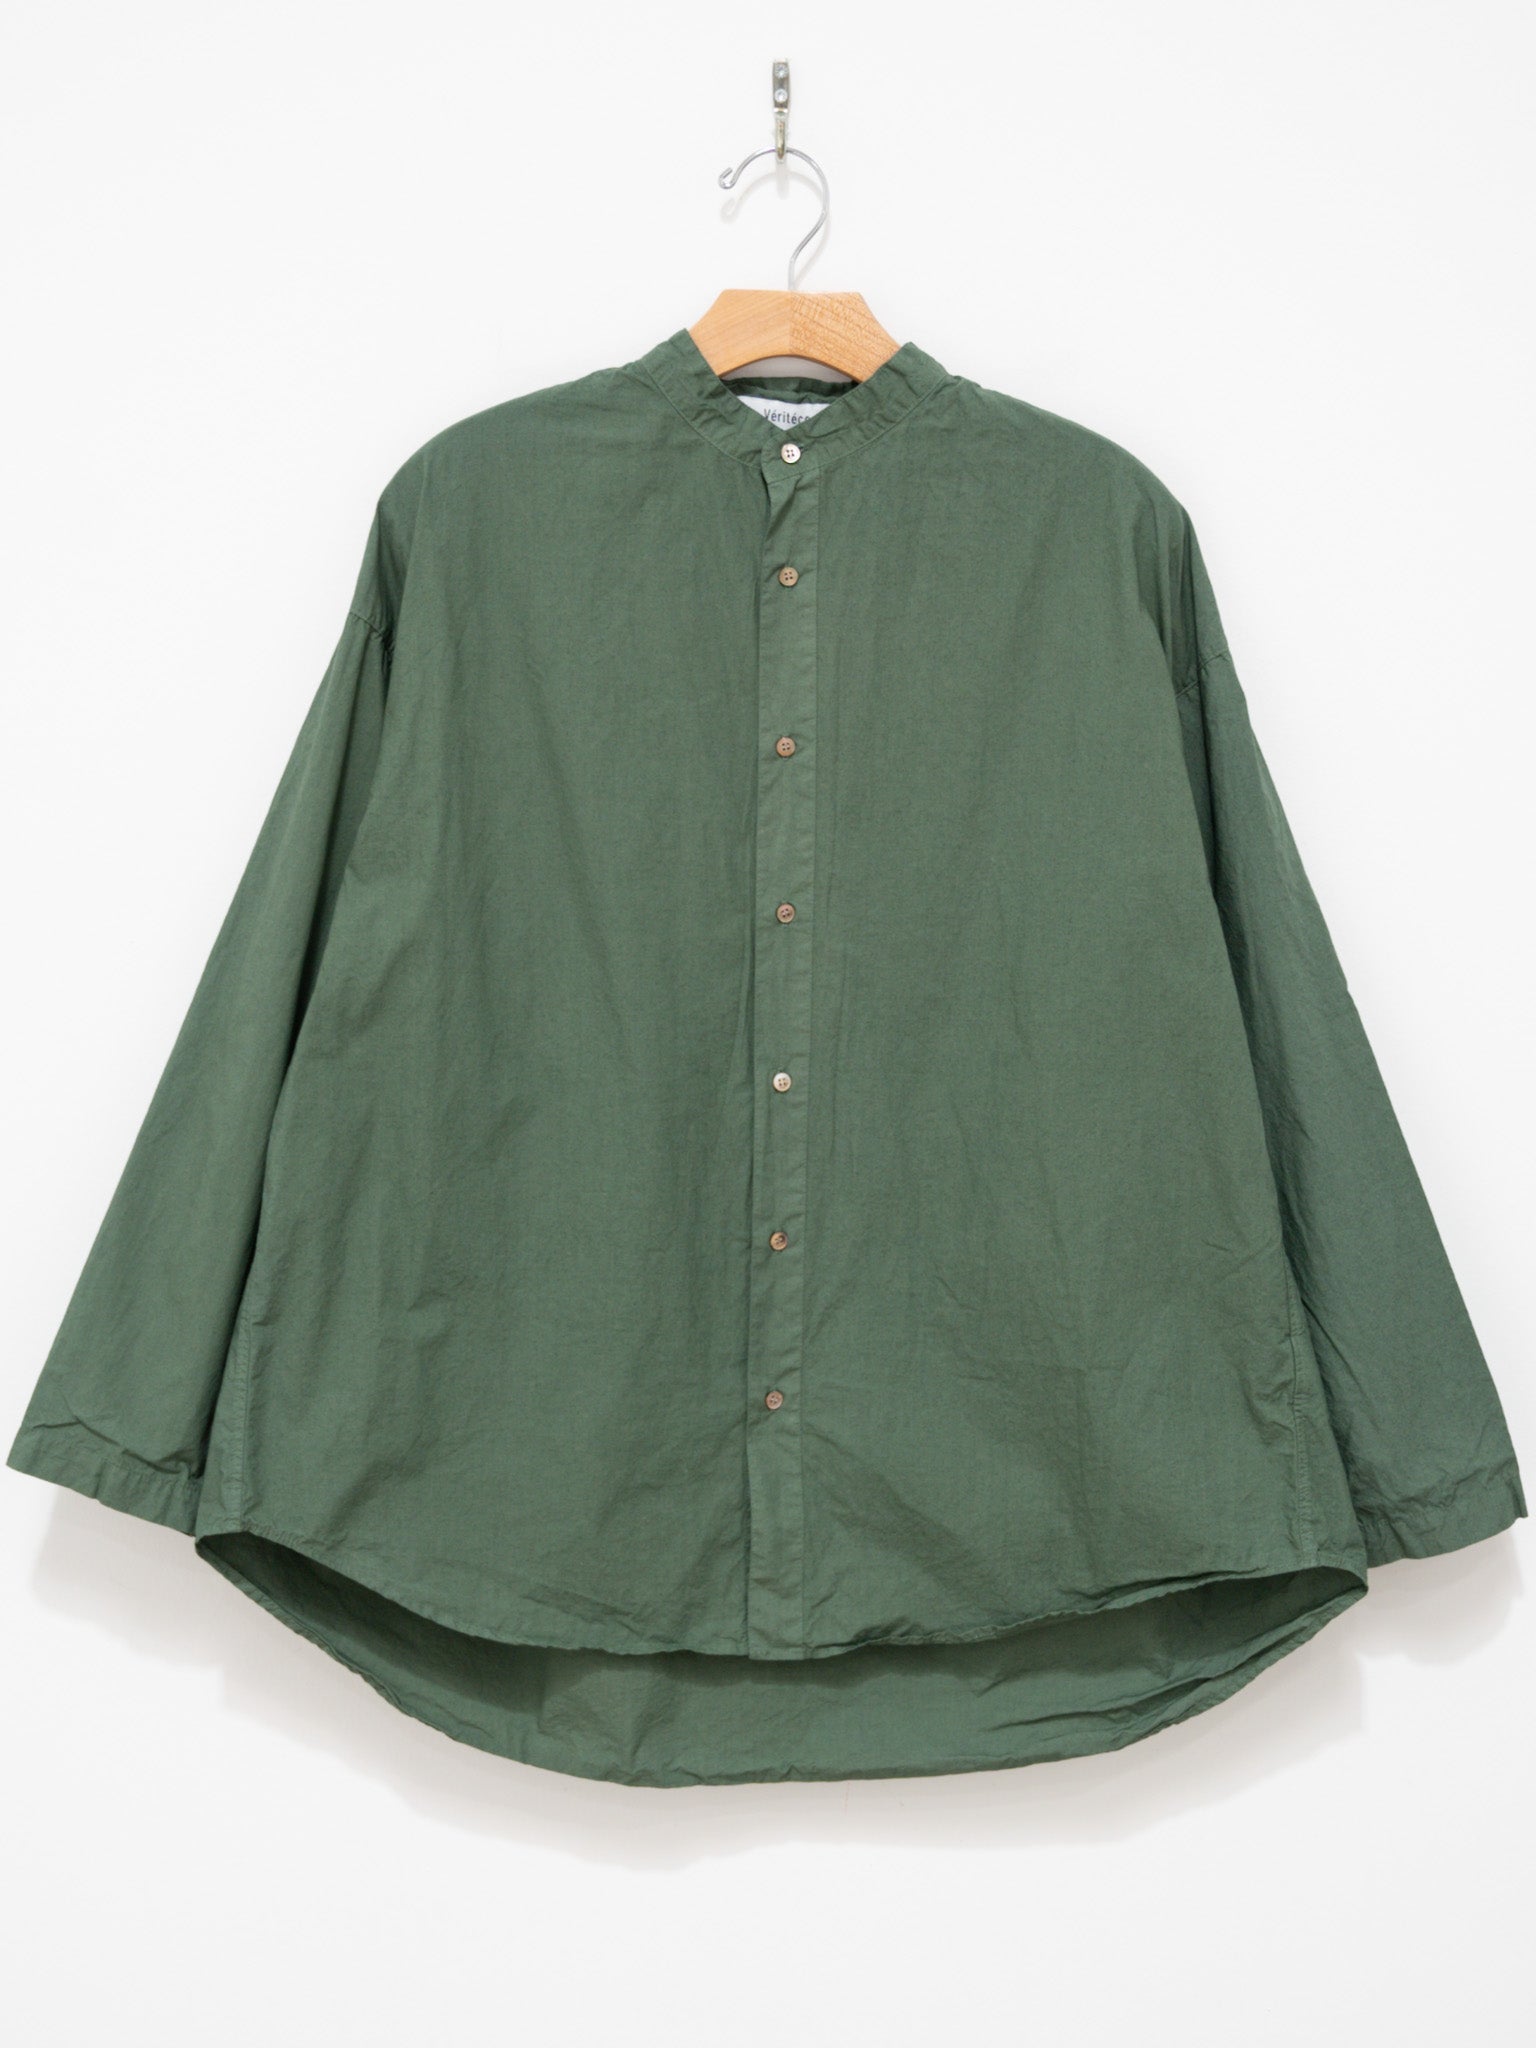 Namu Shop - Veritecoeur Stand Collar Shirt - Green